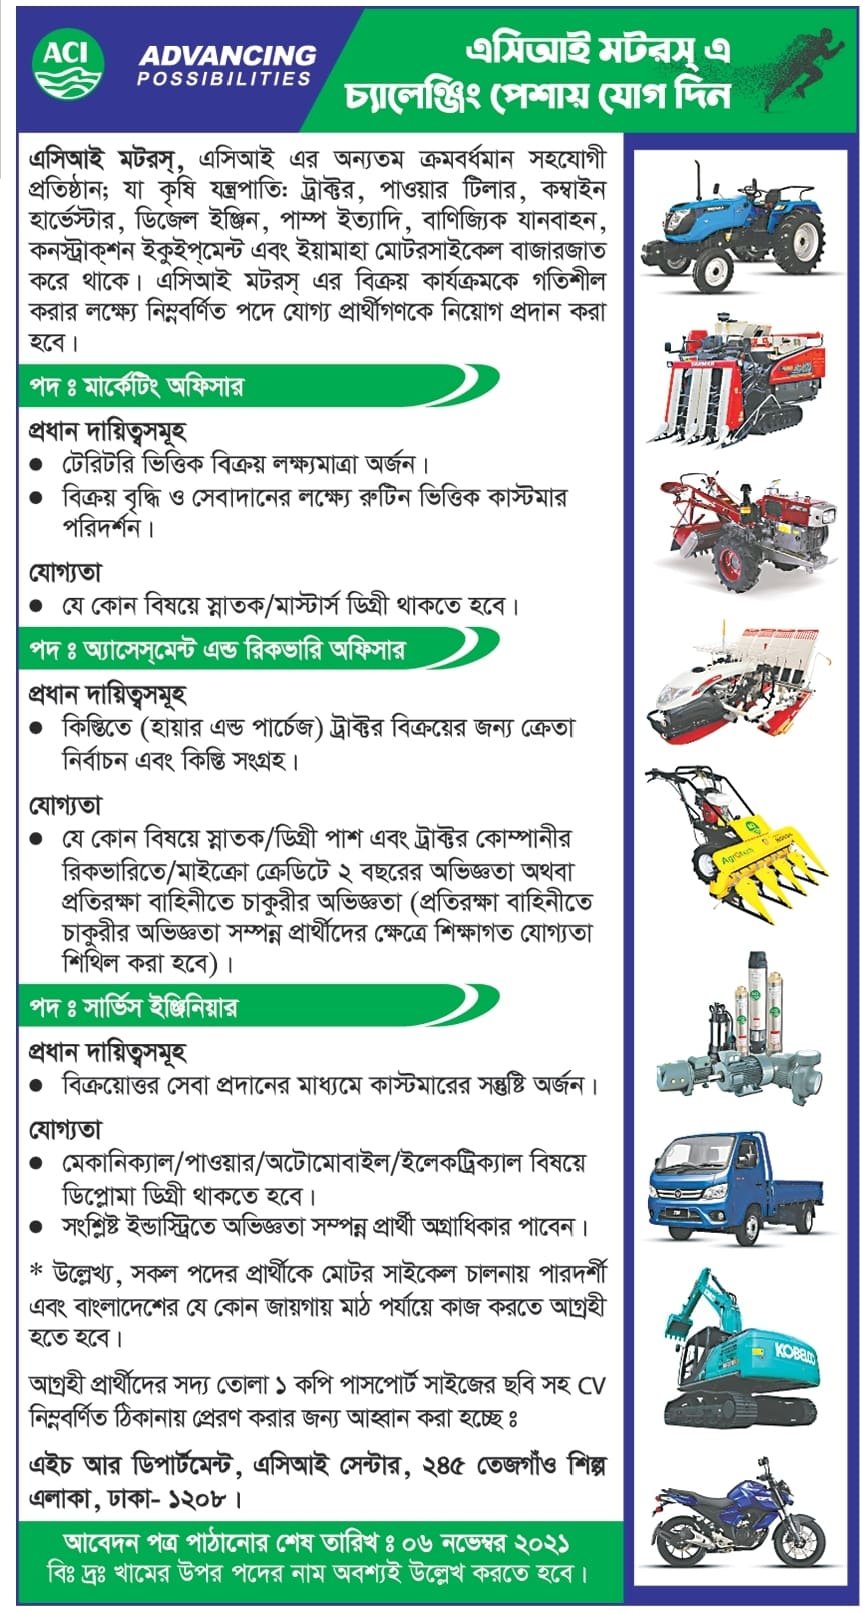 ACI Motors Limited Job Circular 2021 PDF & Image Download